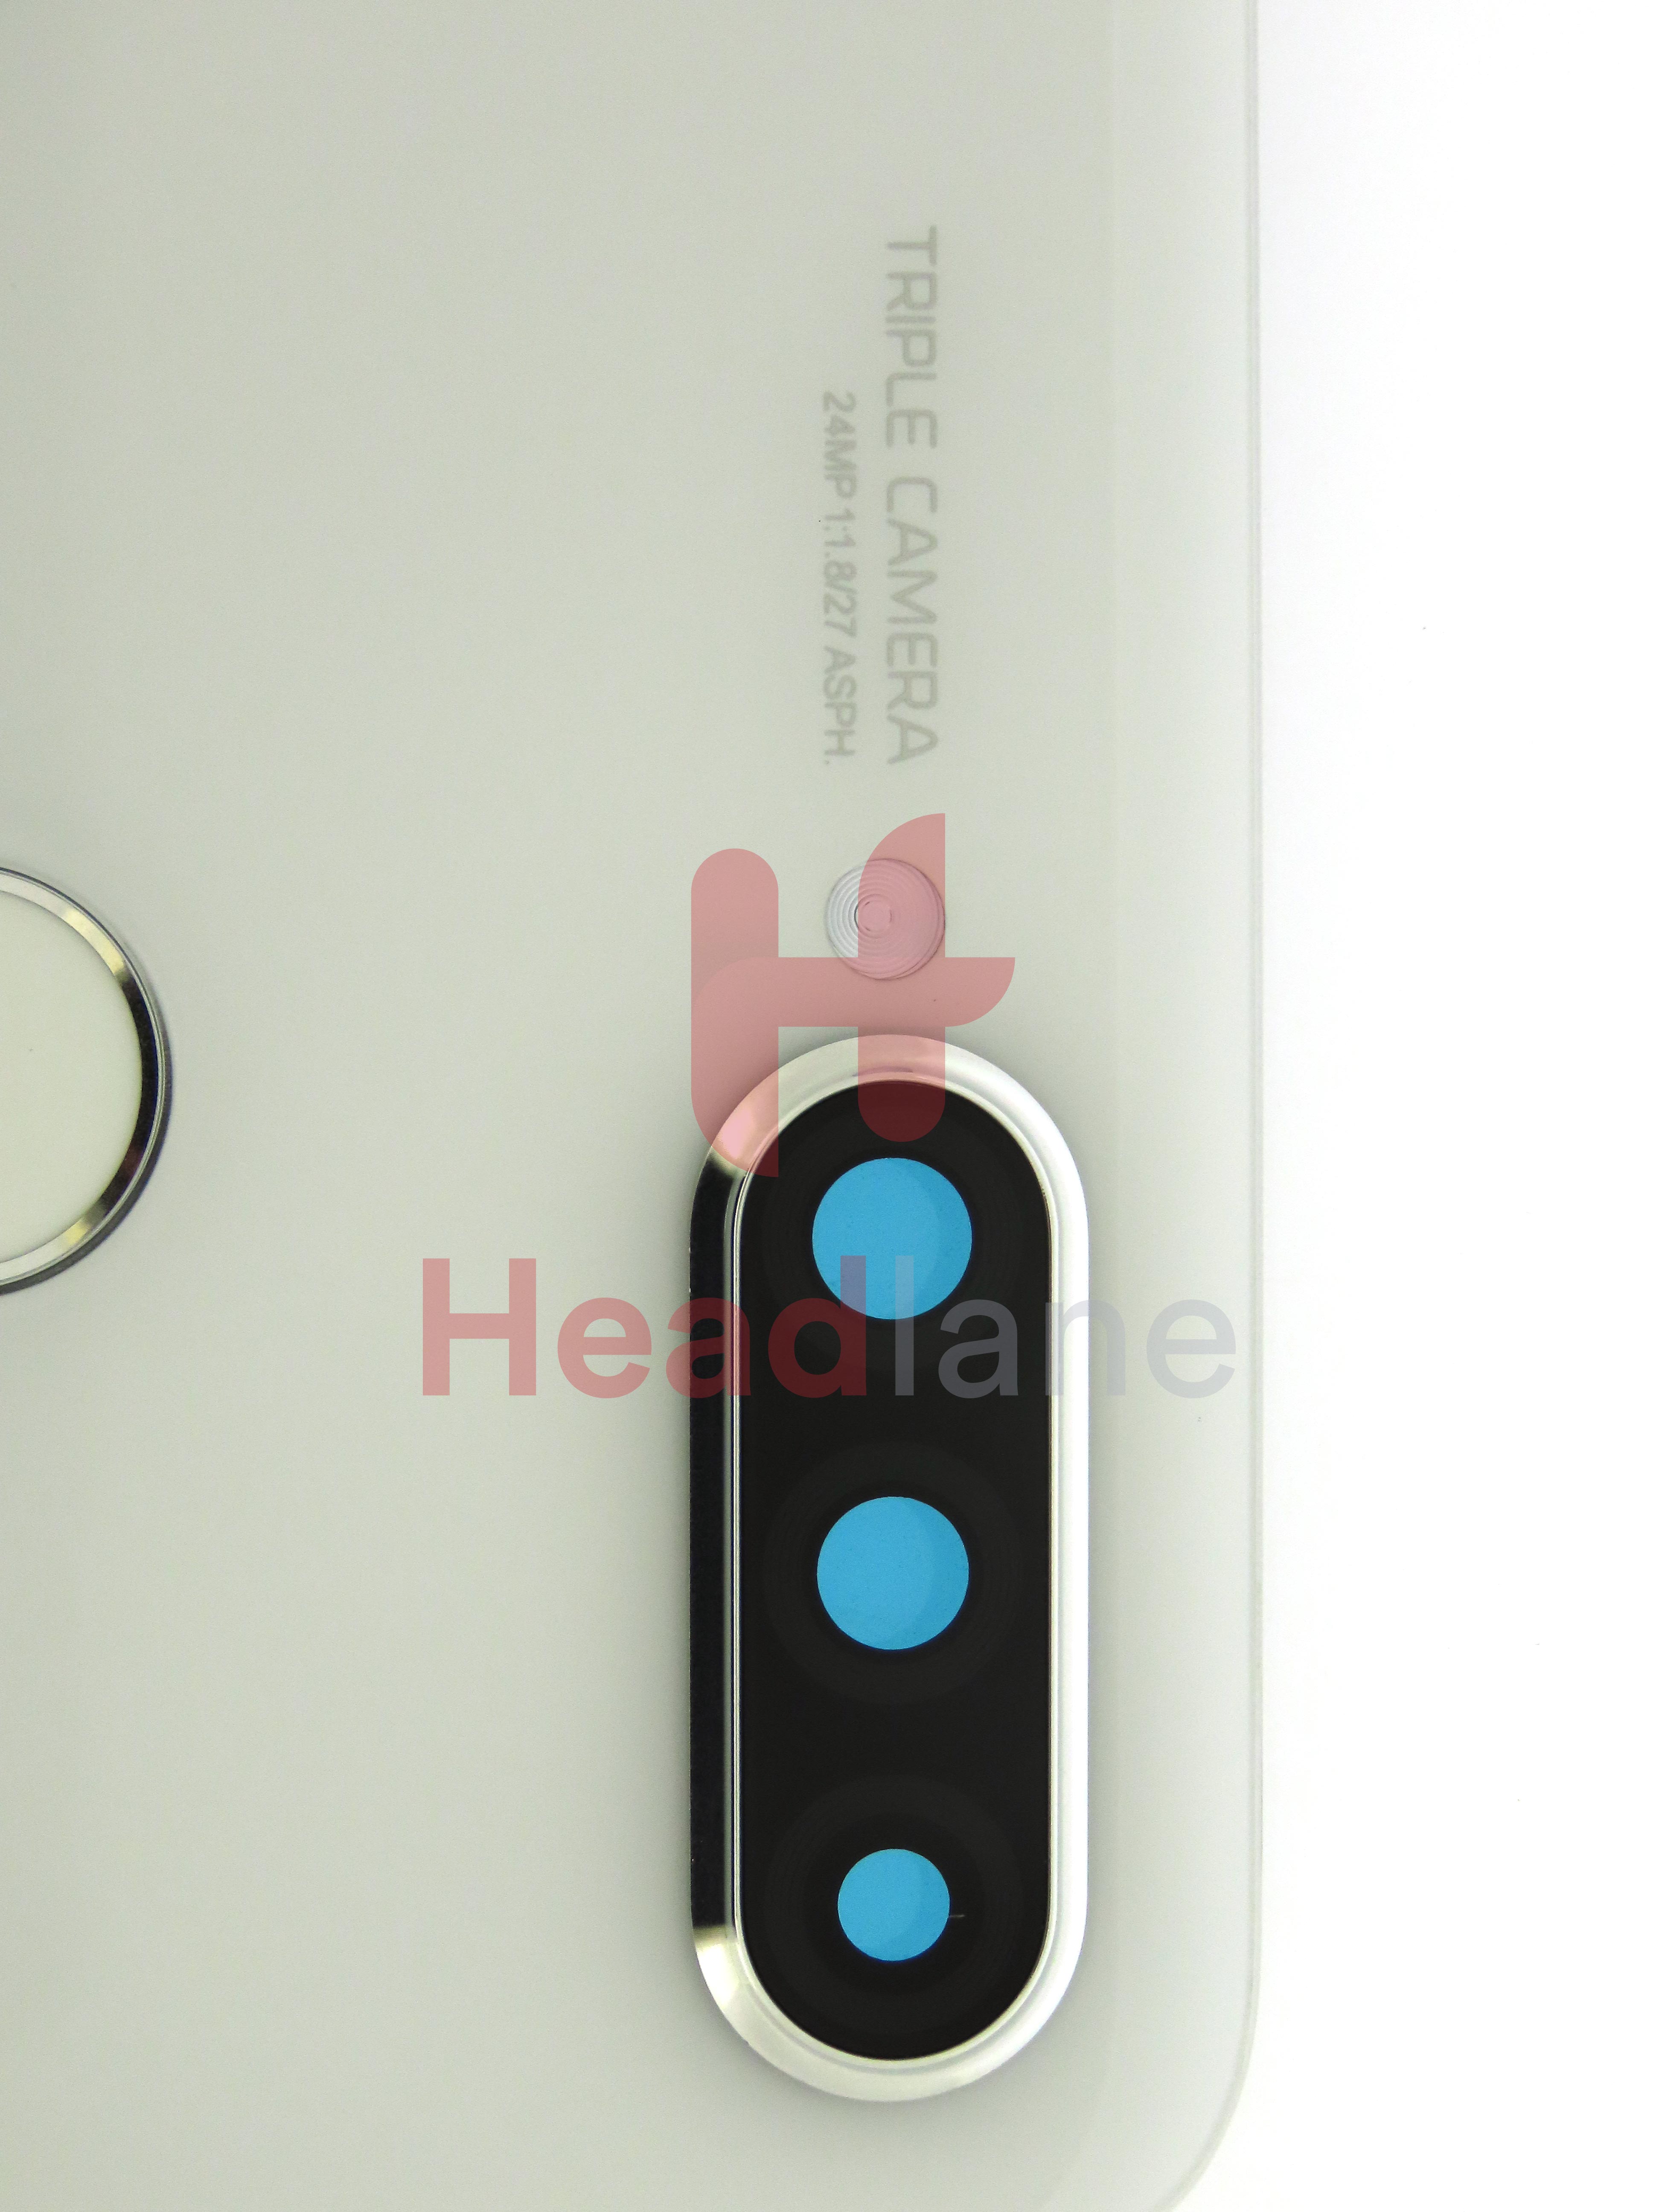 Huawei P30 Lite Back / Battery Cover + Fingerprint Sensor - White (MAR-LX1M 24MP Rear Camera)